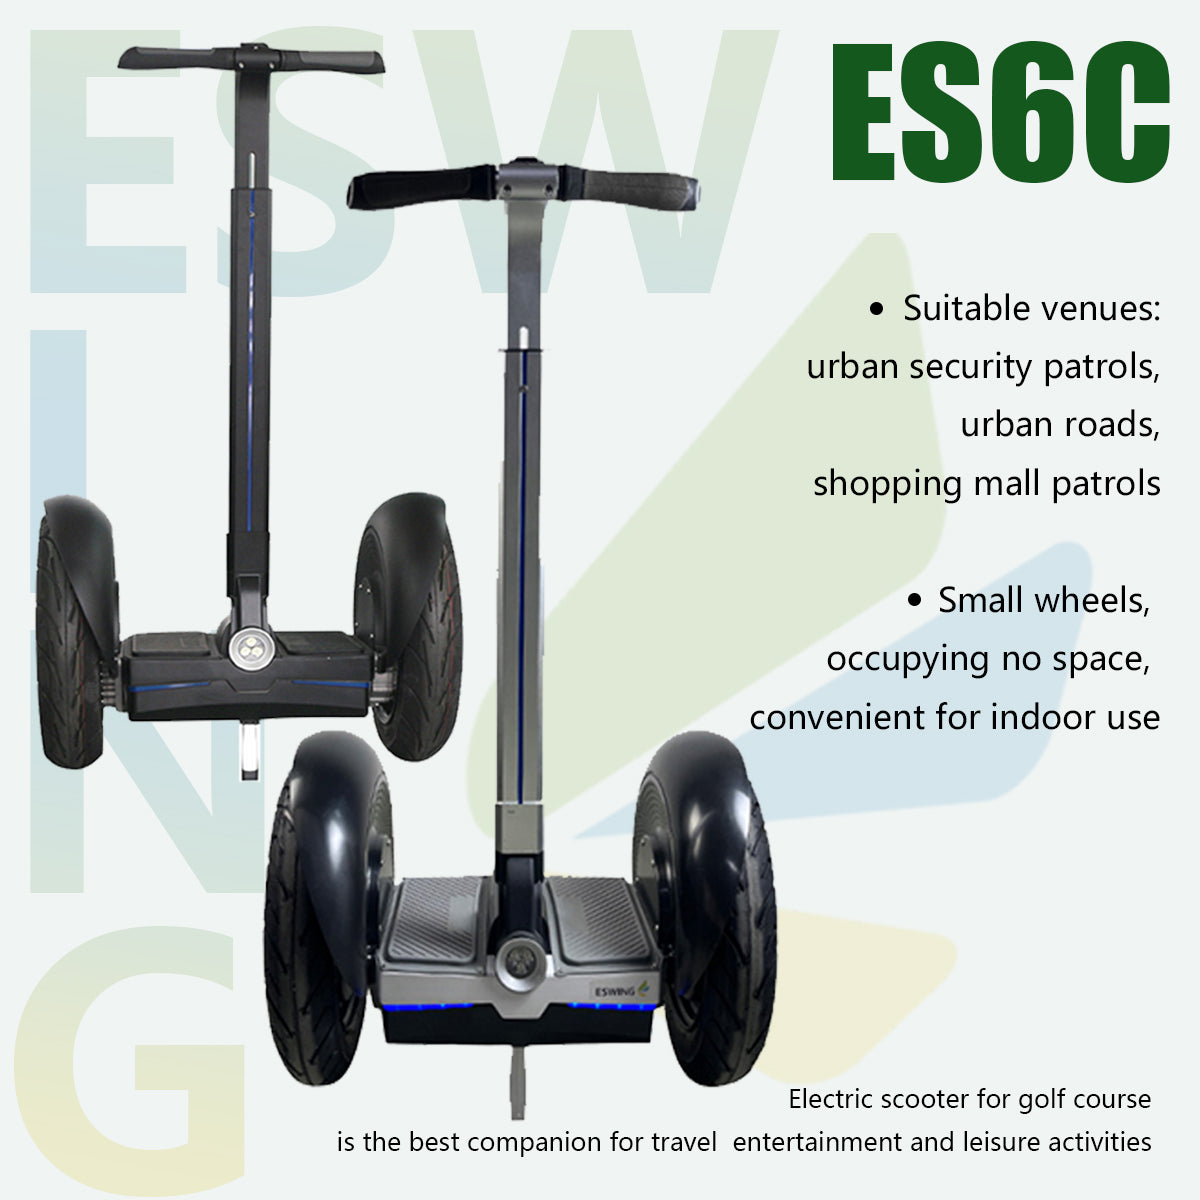 ESWING ES6C City Edition Electric Self-Balancing Scooter